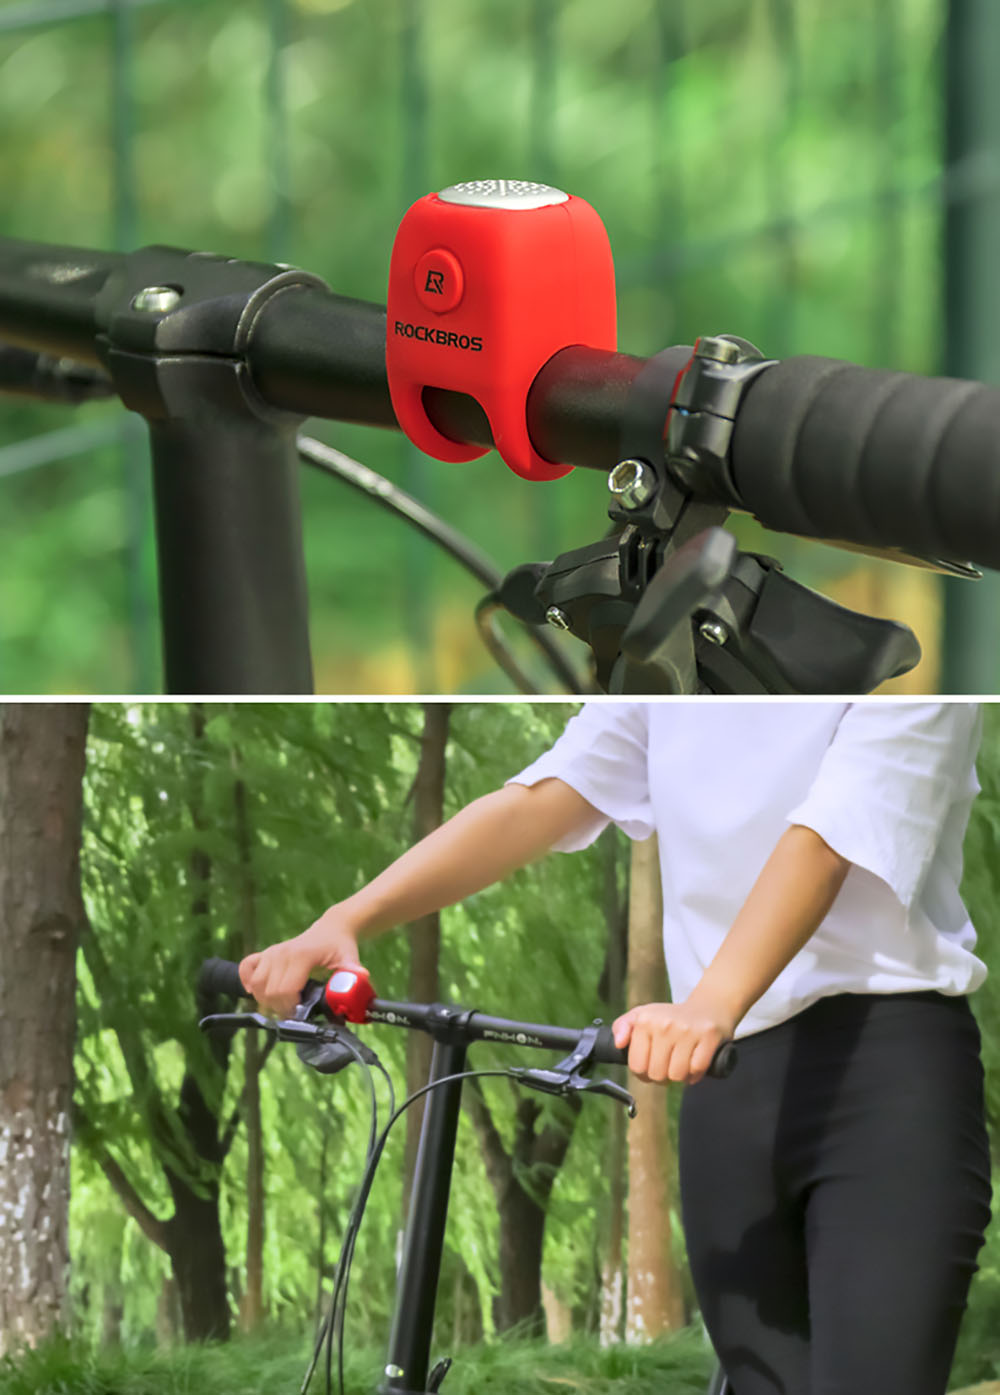 ROCKBROS Electric Cycling Bell 90 dB Horn Rainproof Bicycle Handlebar Silica Gel Shell Ring Bike Bell - Green